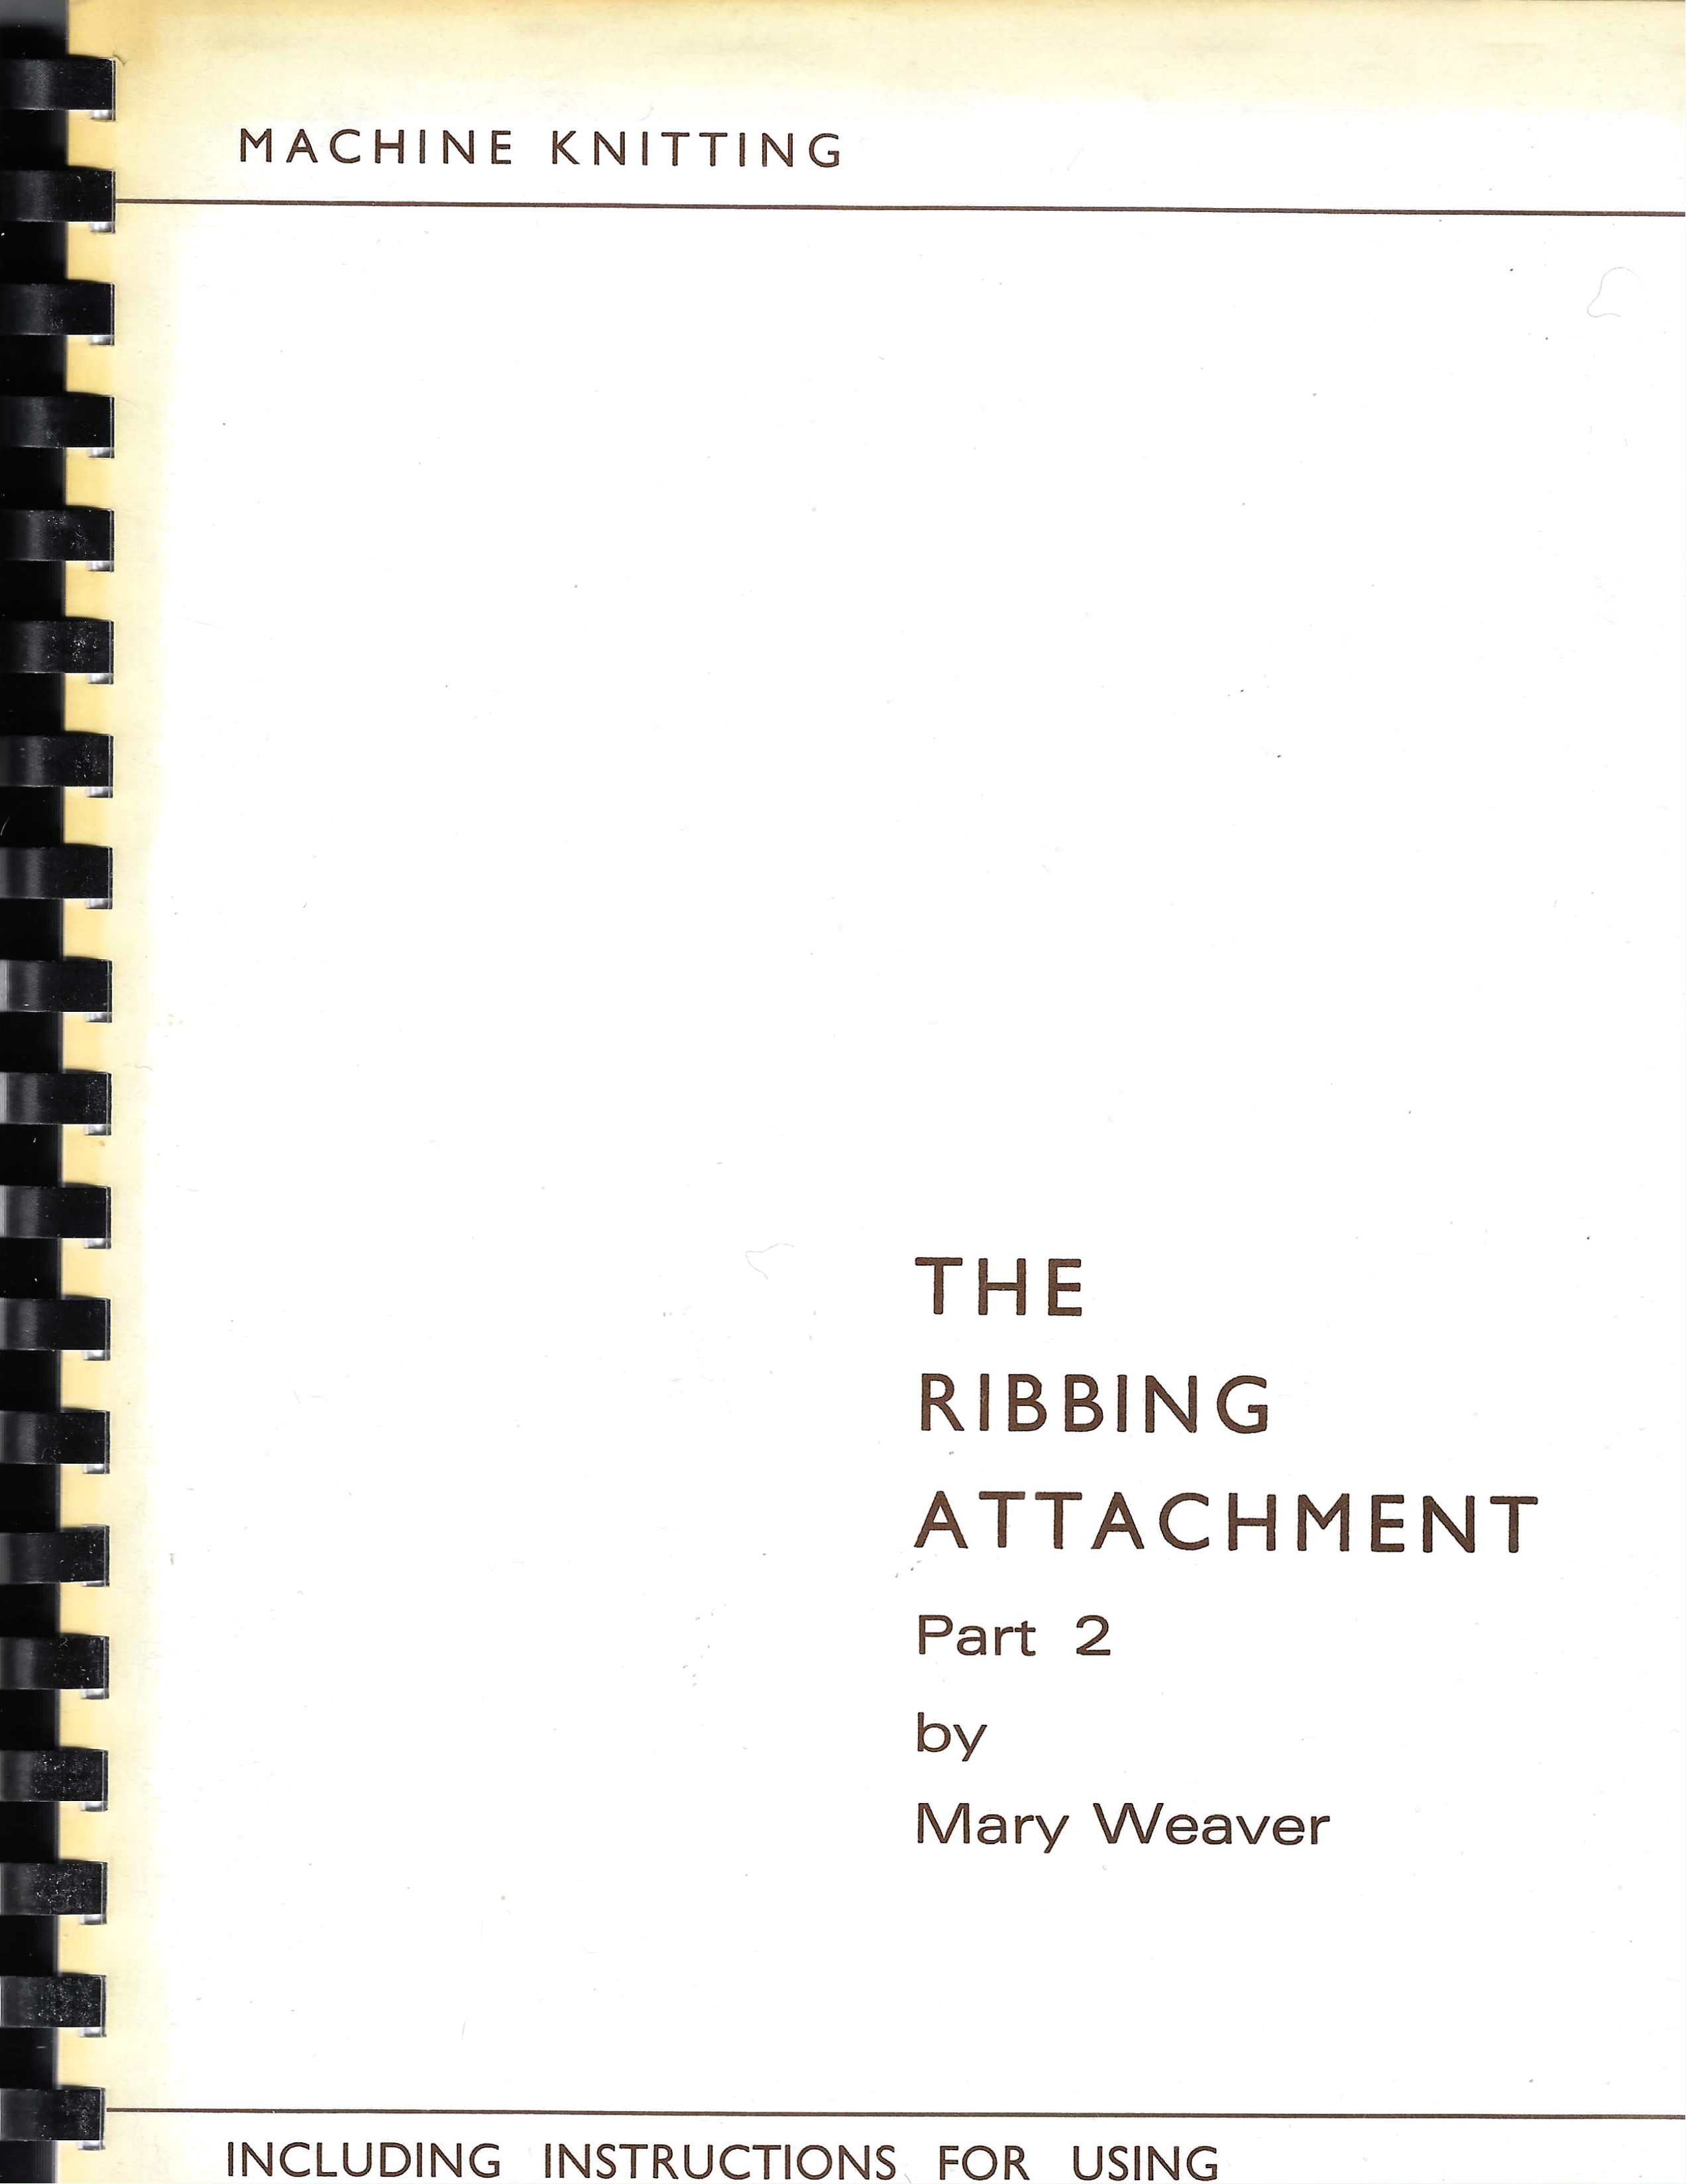 The Ribbing Attachment Part 2